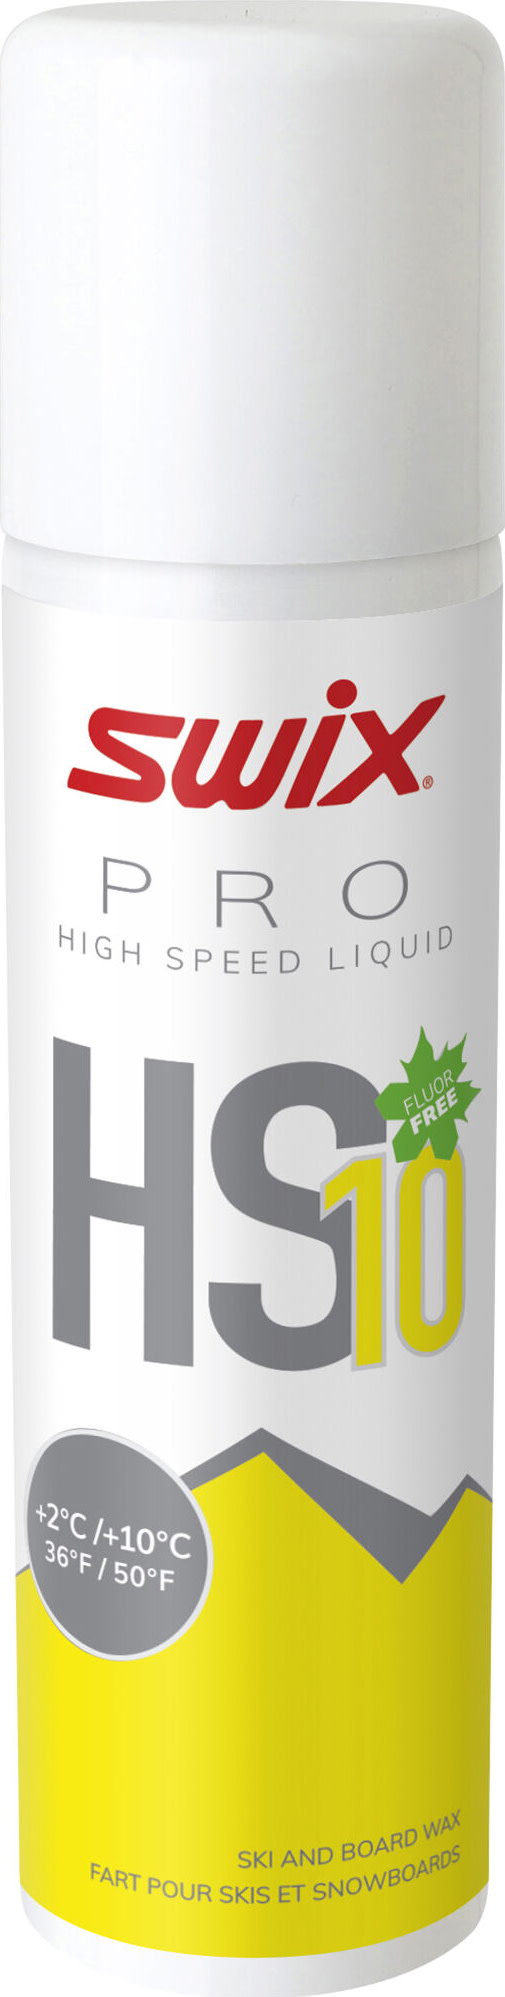 Swix HS10 Liq. Yellow +2°C/+10°C 125ml Nocolor